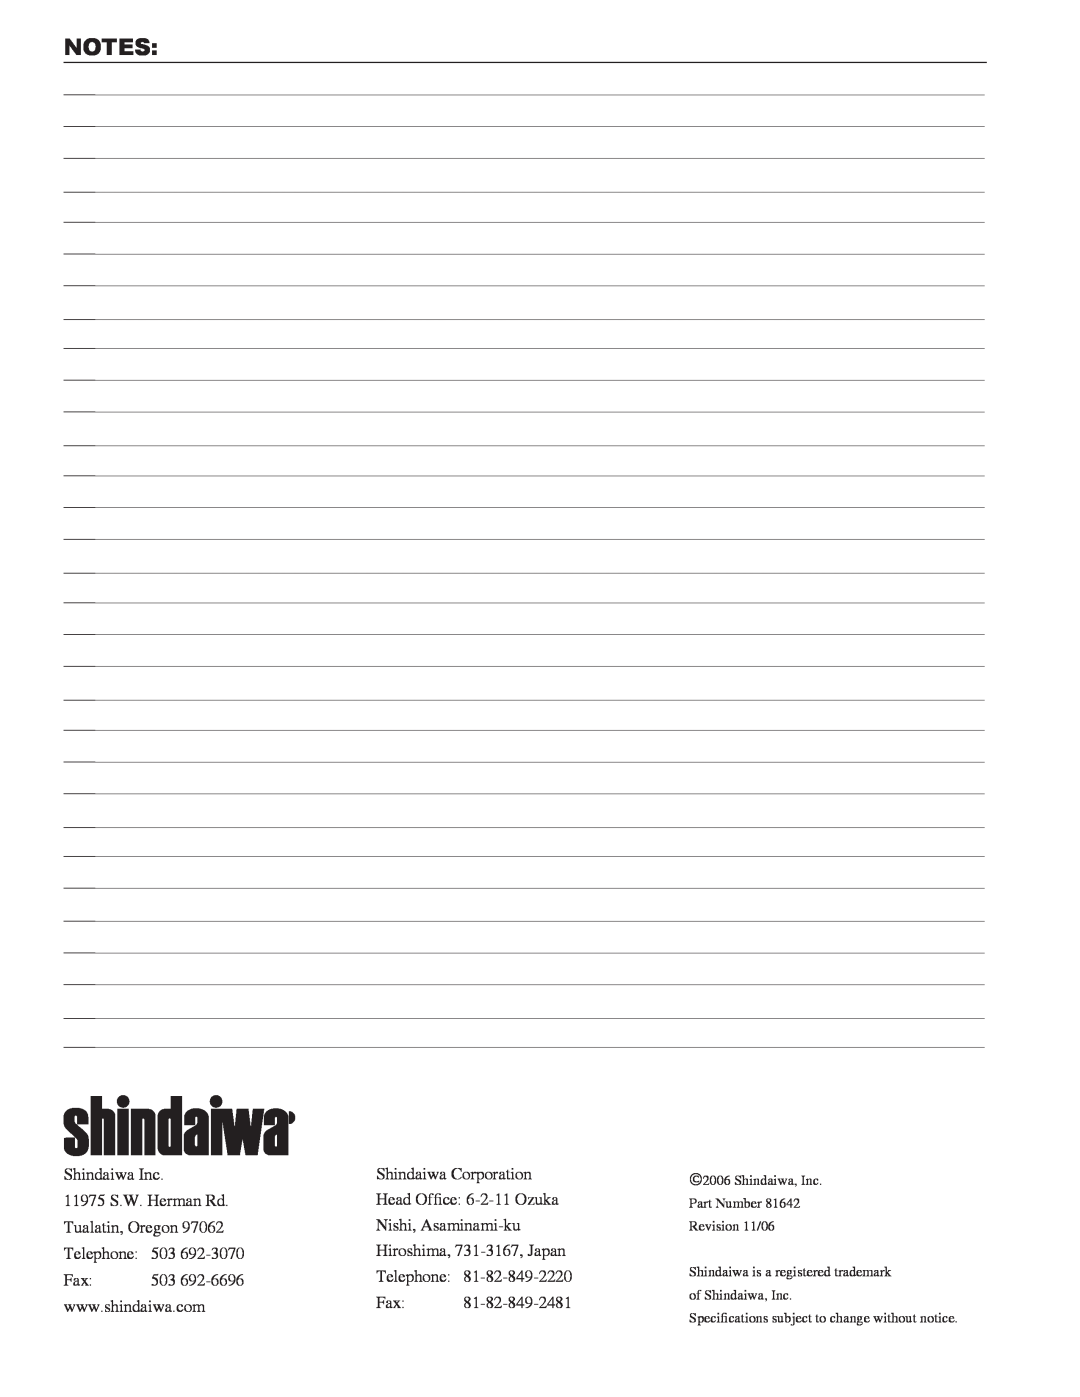 Shindaiwa 81642 manual Shindaiwa, Inc Part Number Revision 11/06, Shindaiwa is a registered trademark of Shindaiwa, Inc 